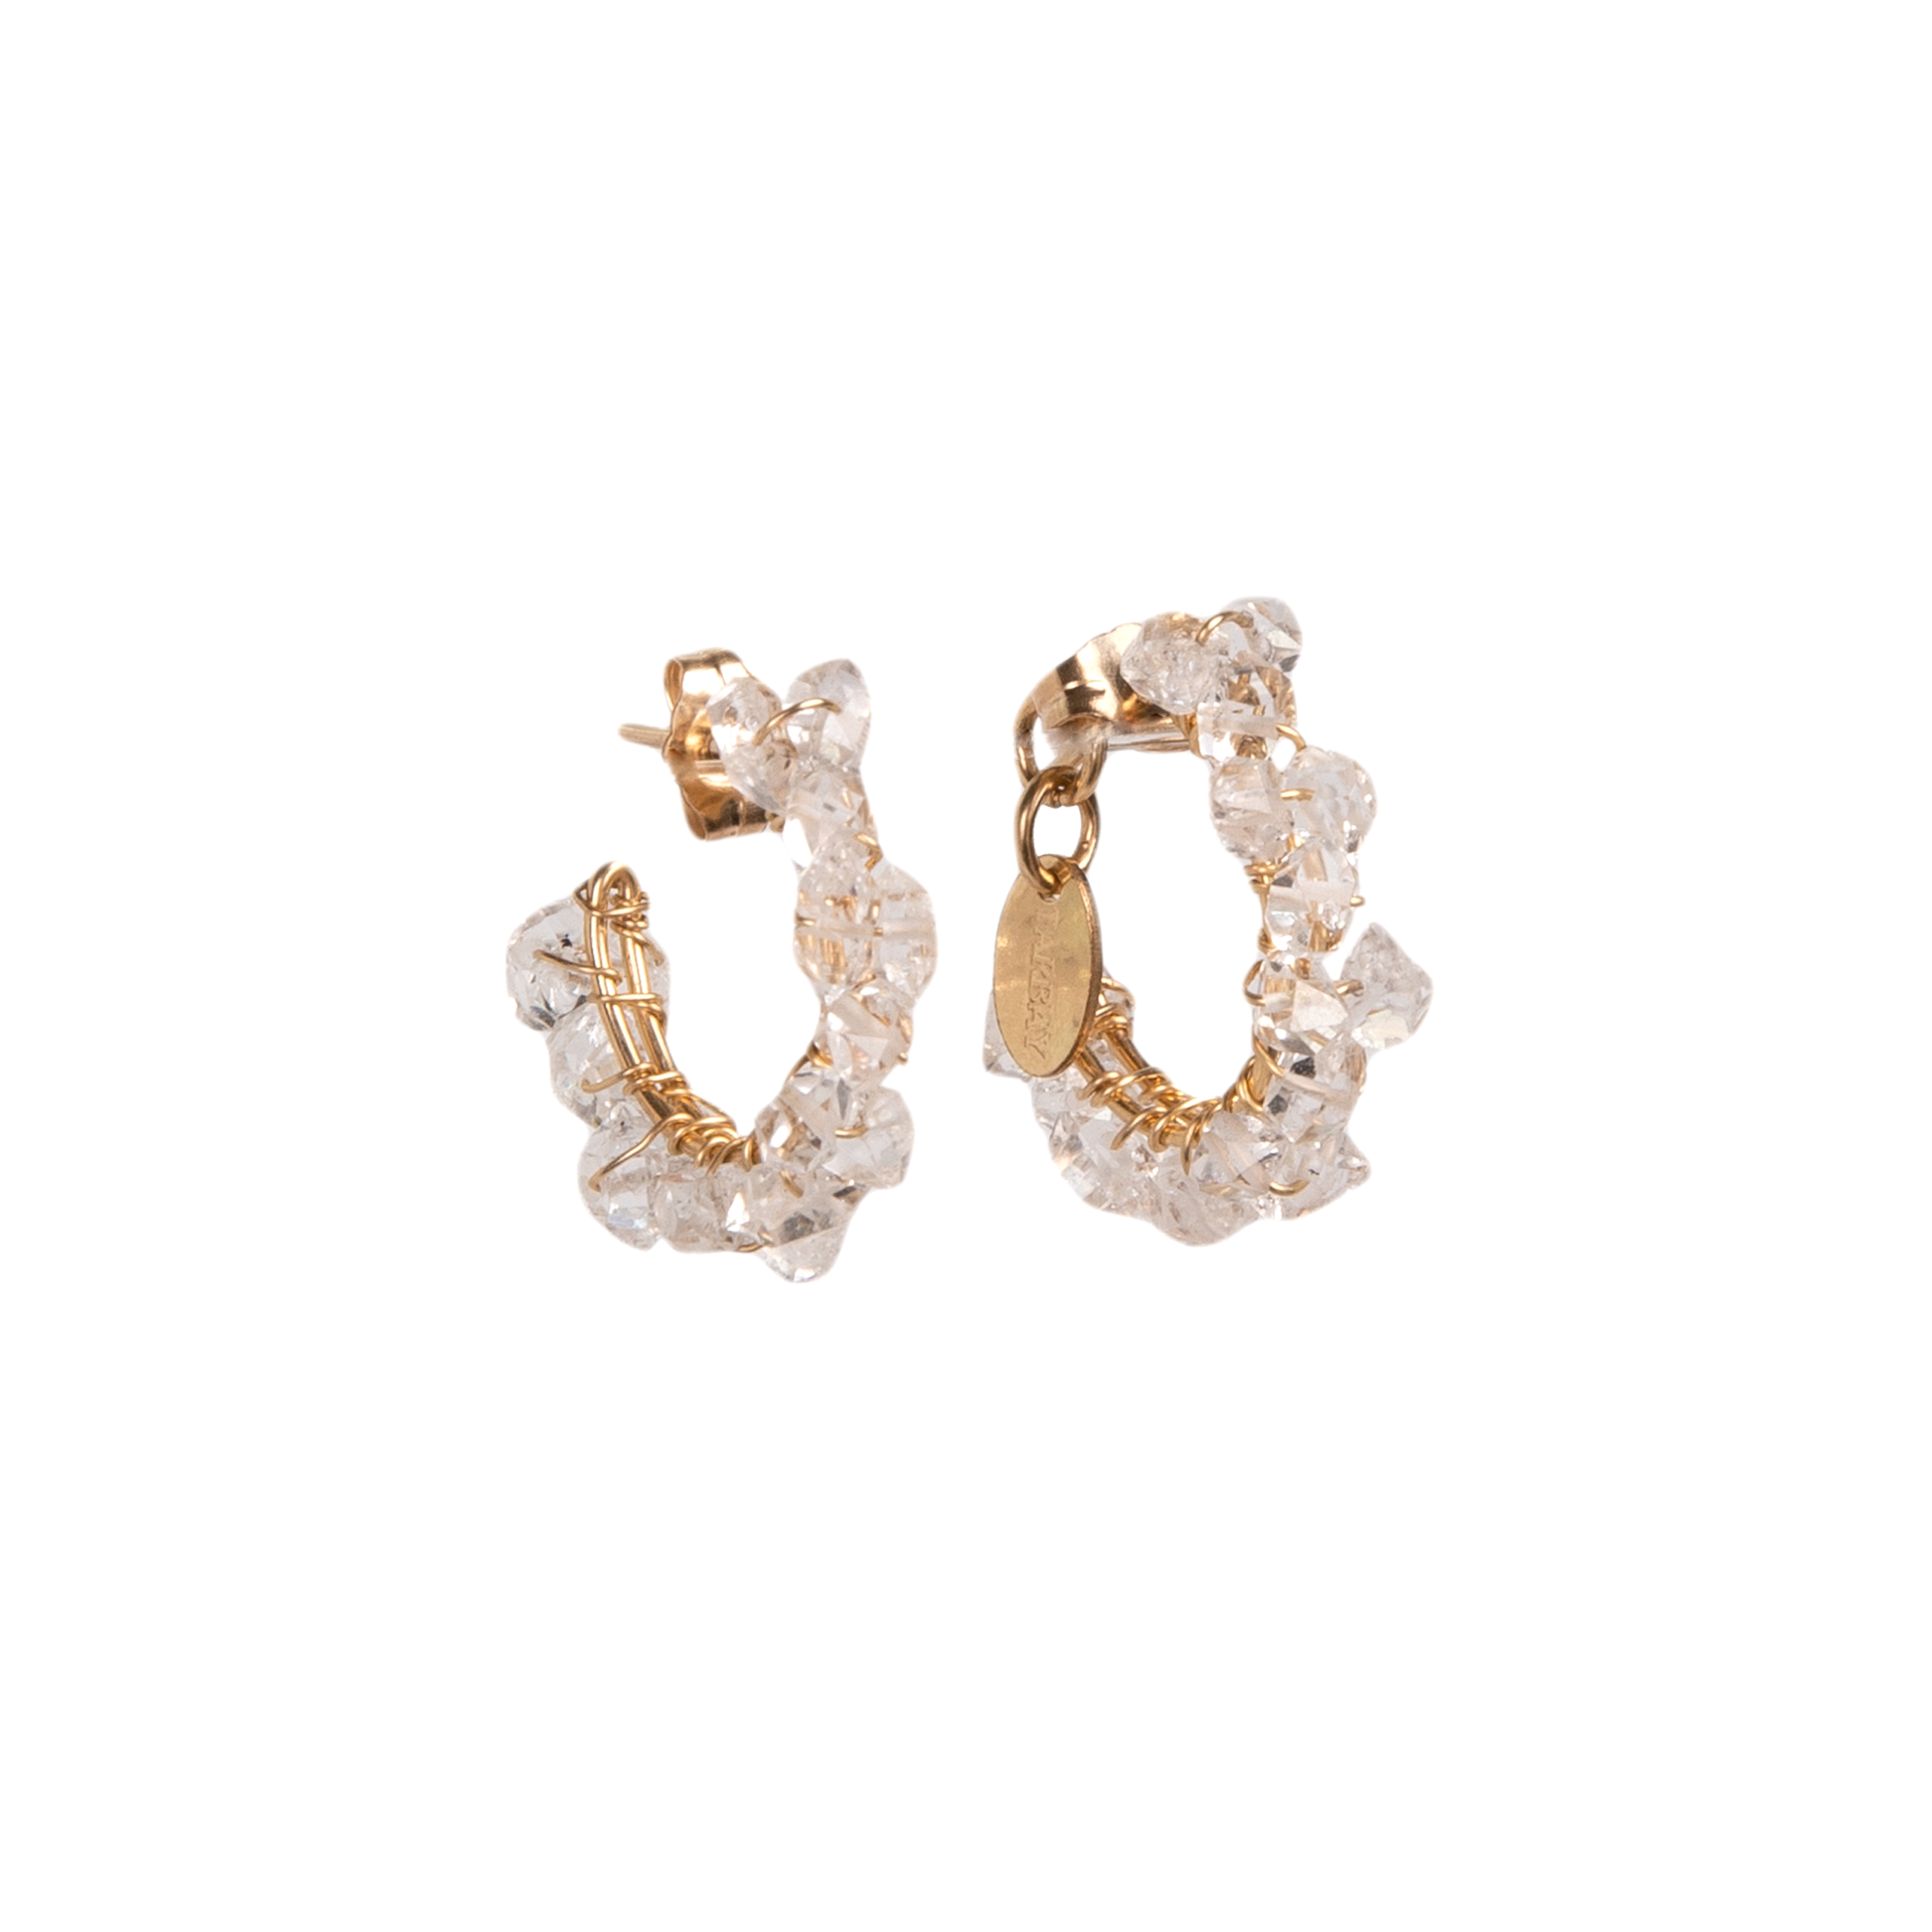 Cleopatra Hoop Earrings #1 (20mm) - Diamond Quartz Earrings TARBAY   